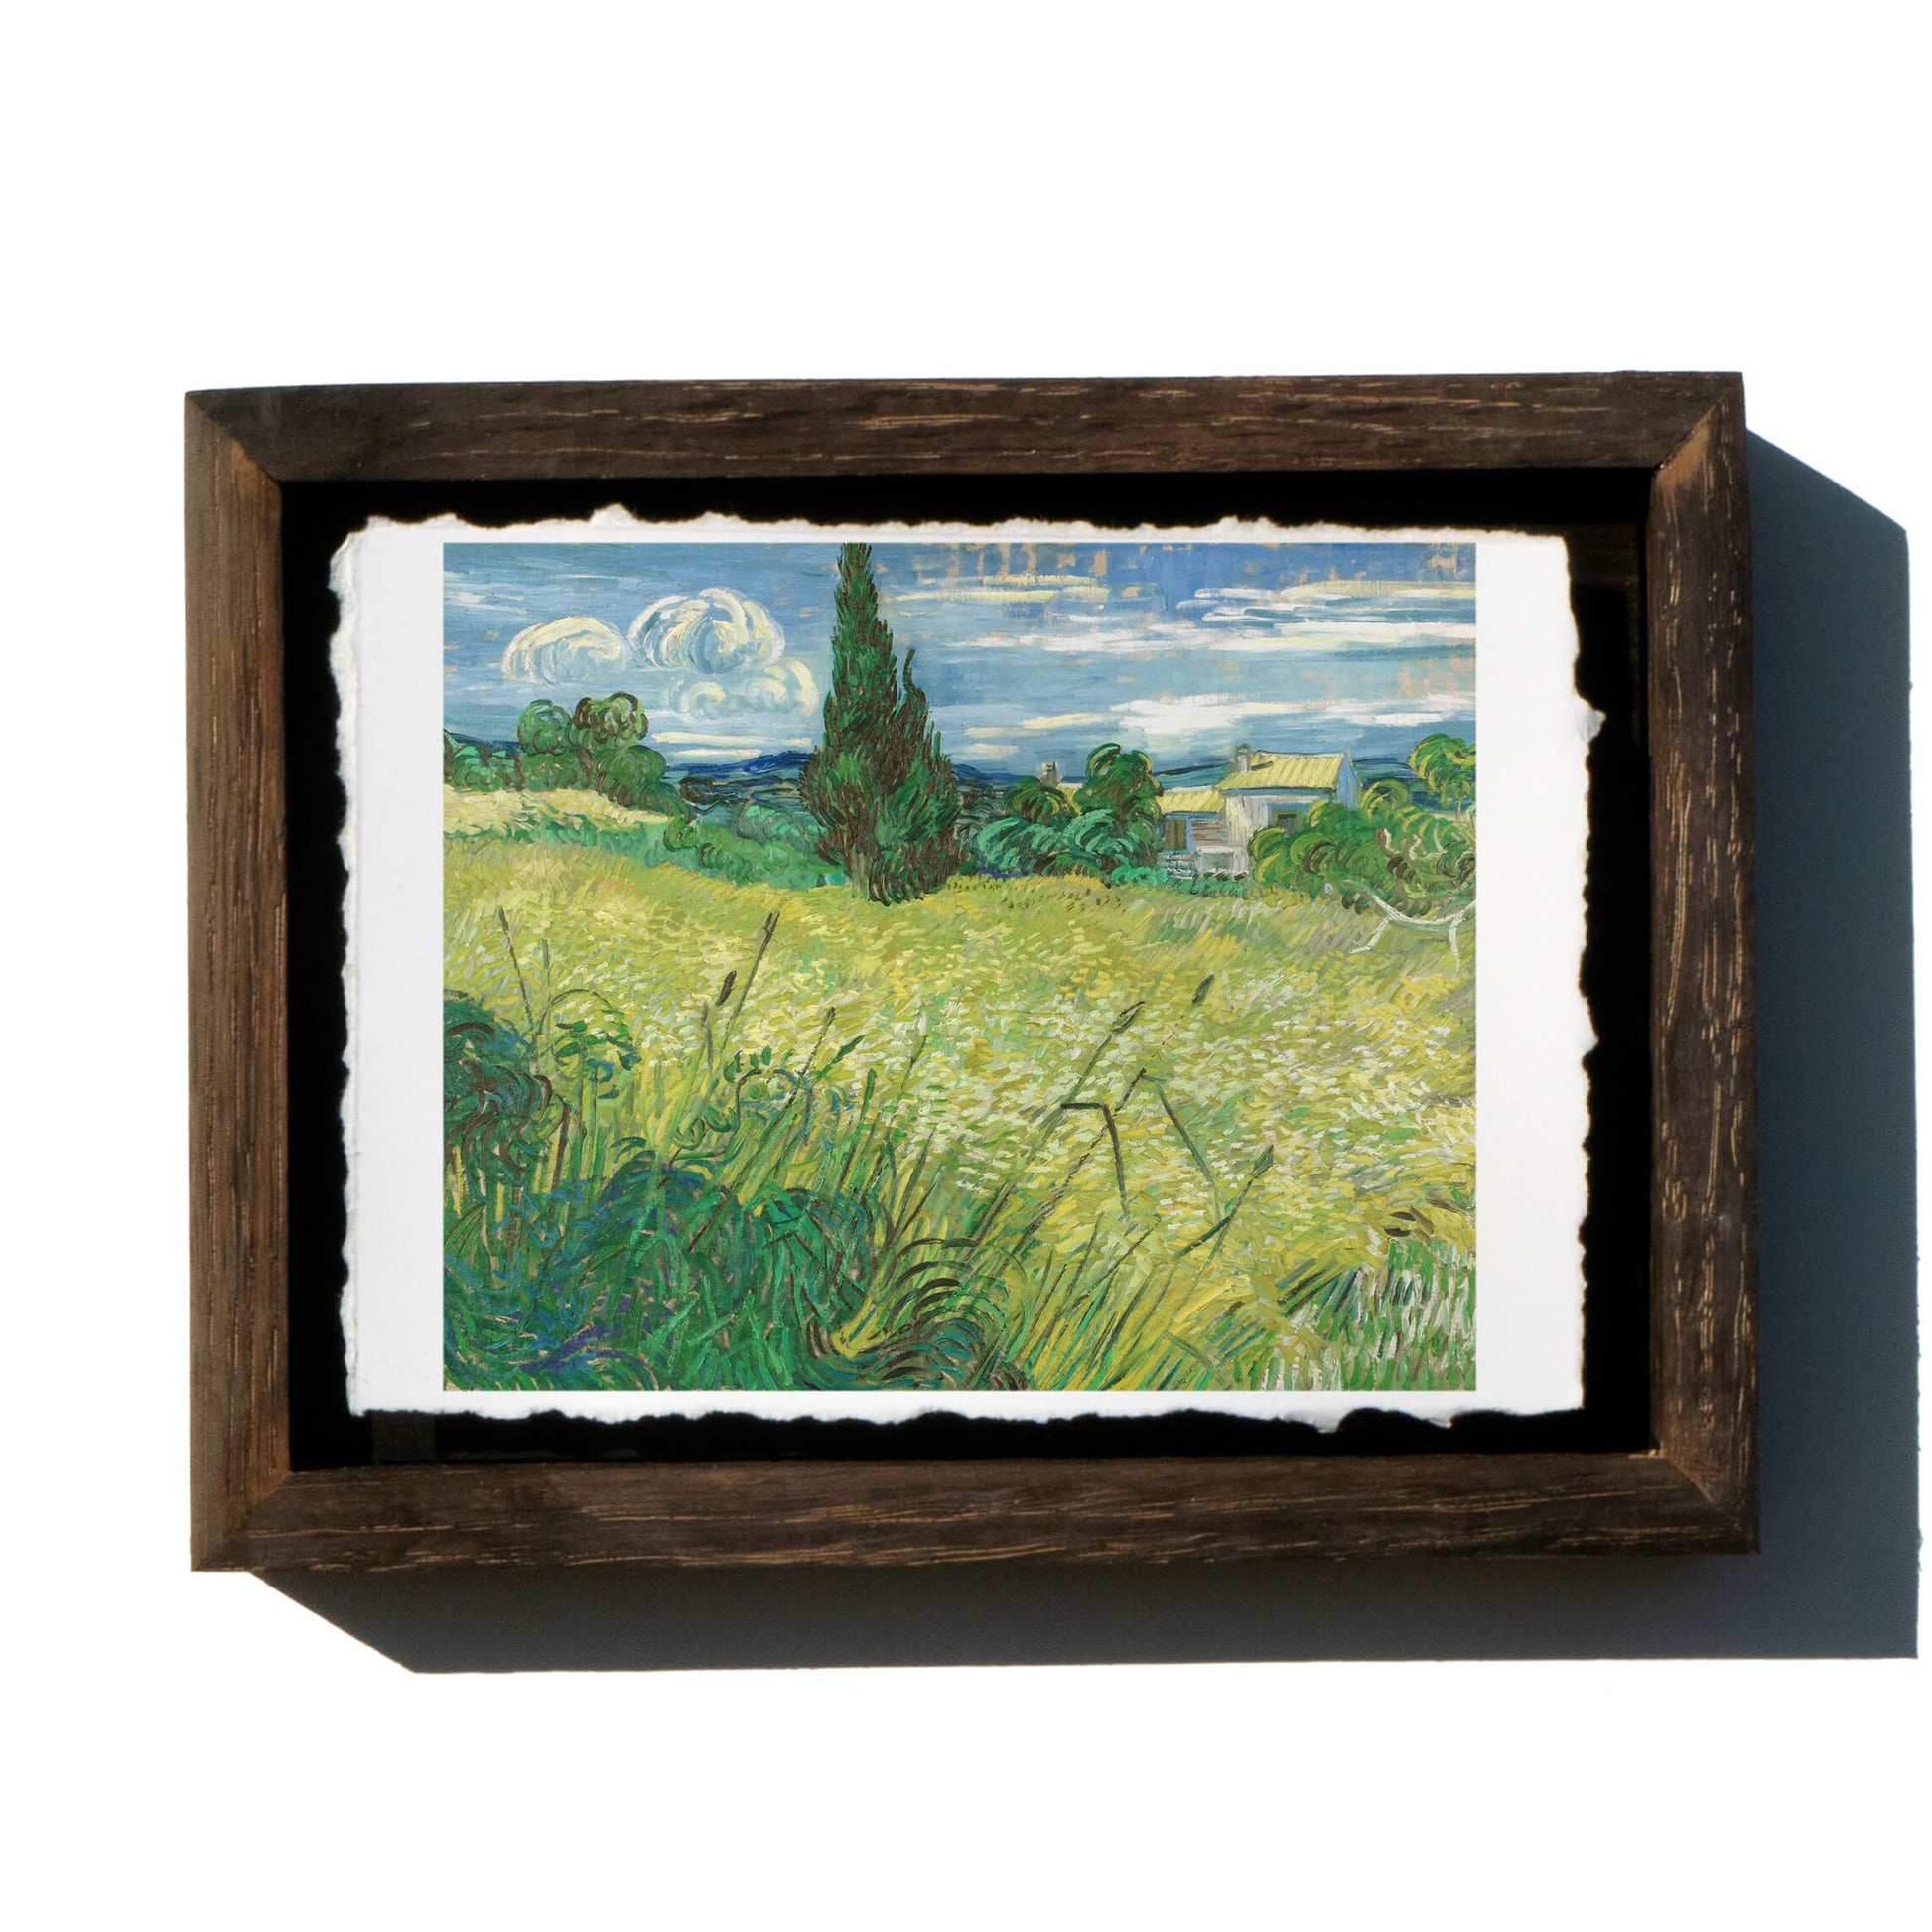 Vincent van Gogh - Green Wheat Field